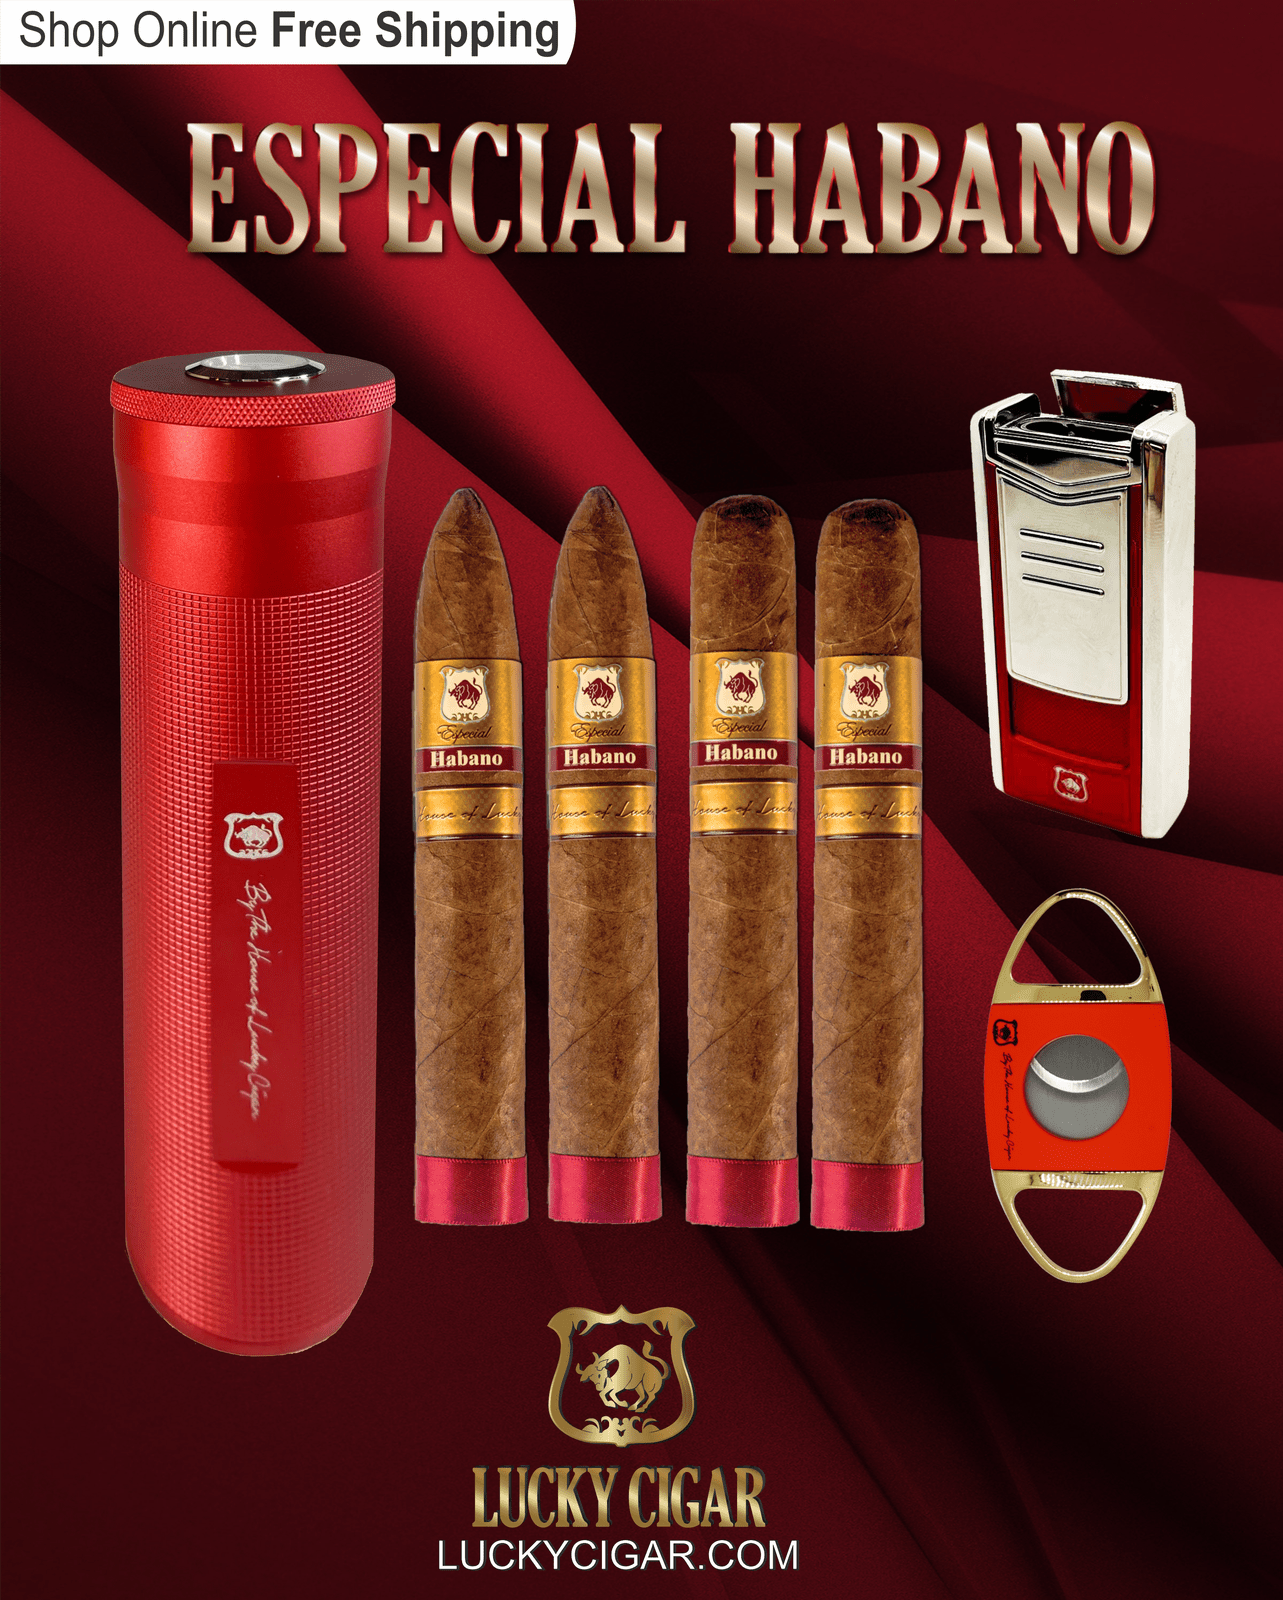 Habano Cigars: Especial Habano by Lucky Cigar: Set of 4 Cigars 2 Toro, 2 Torpedo with Humidor, Torch